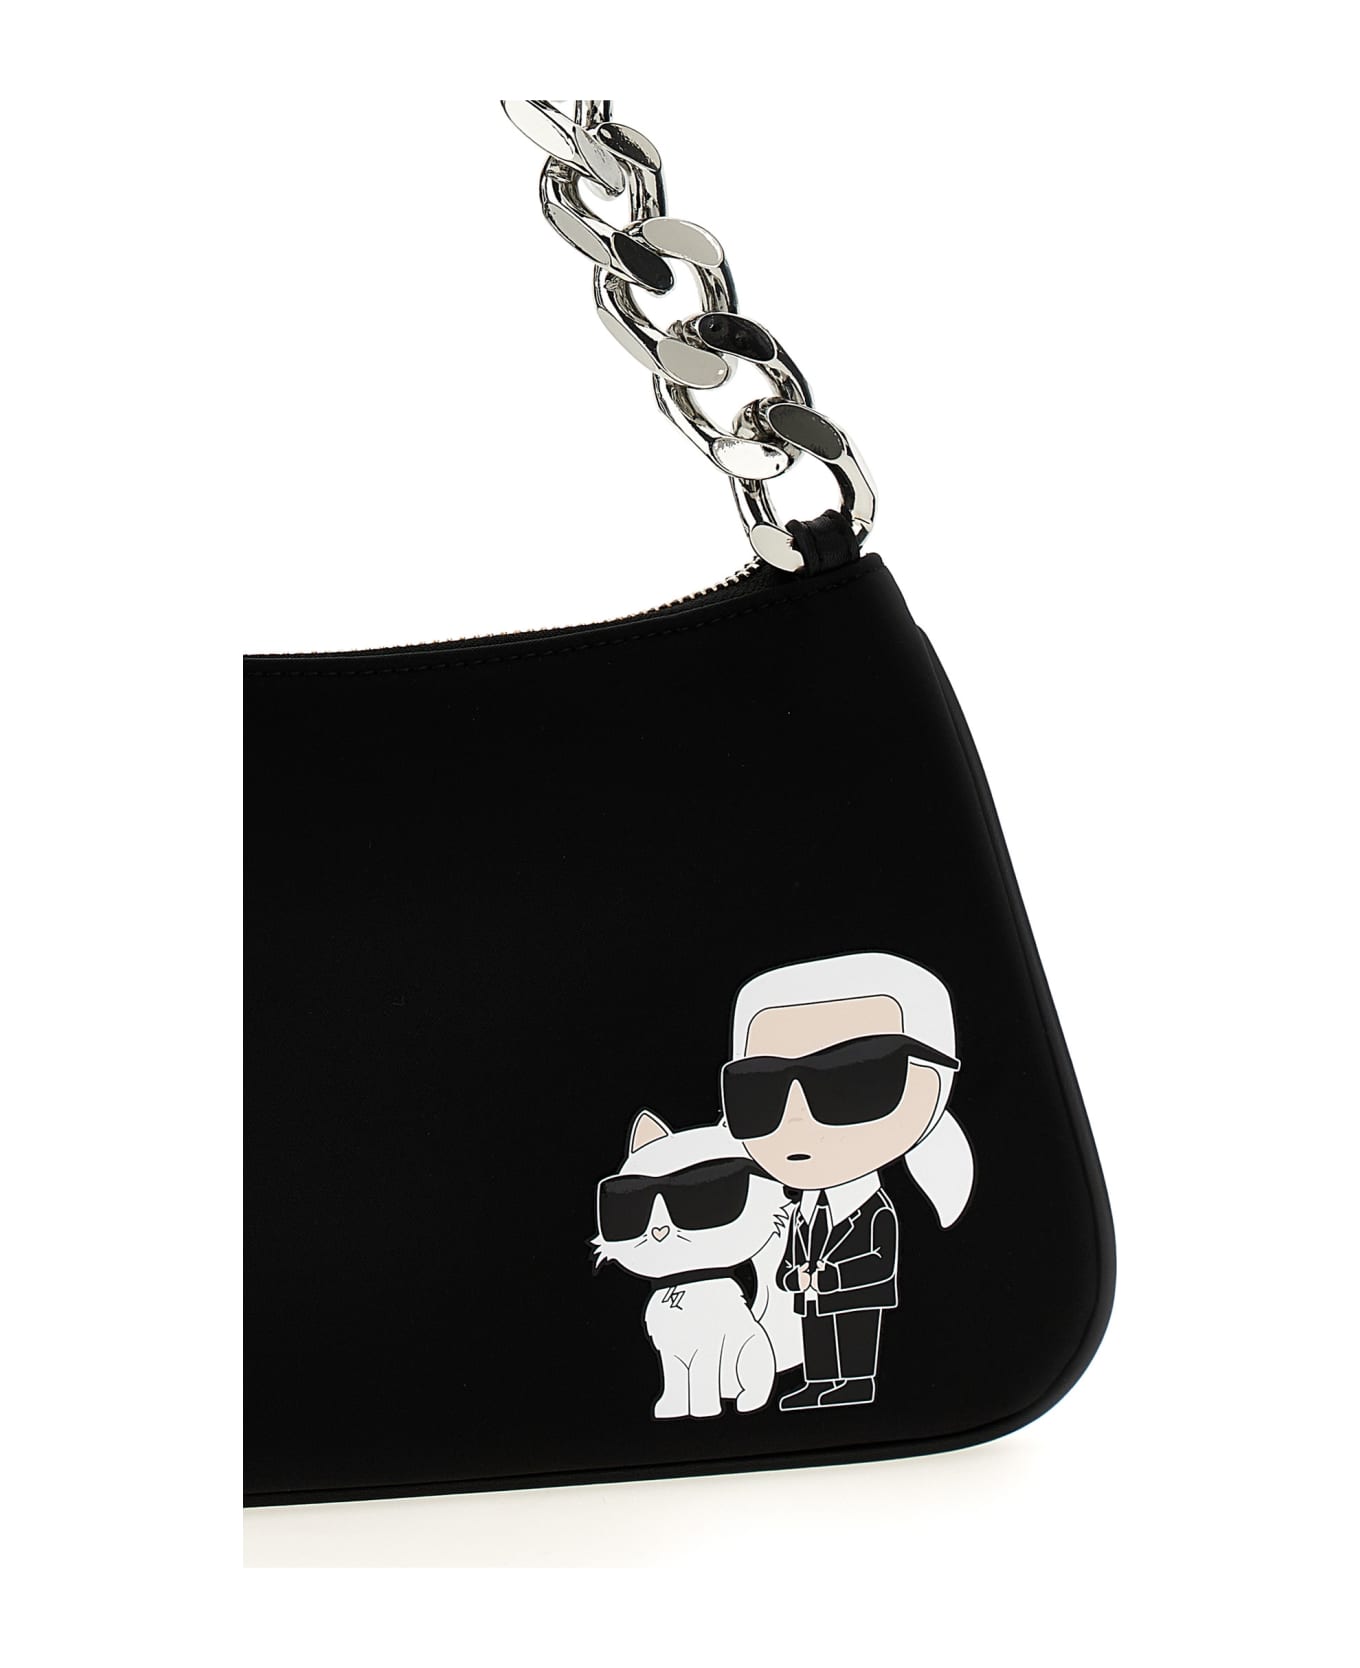 Karl Lagerfeld 'ikonik 2.0' Shoulder Bag - Black  